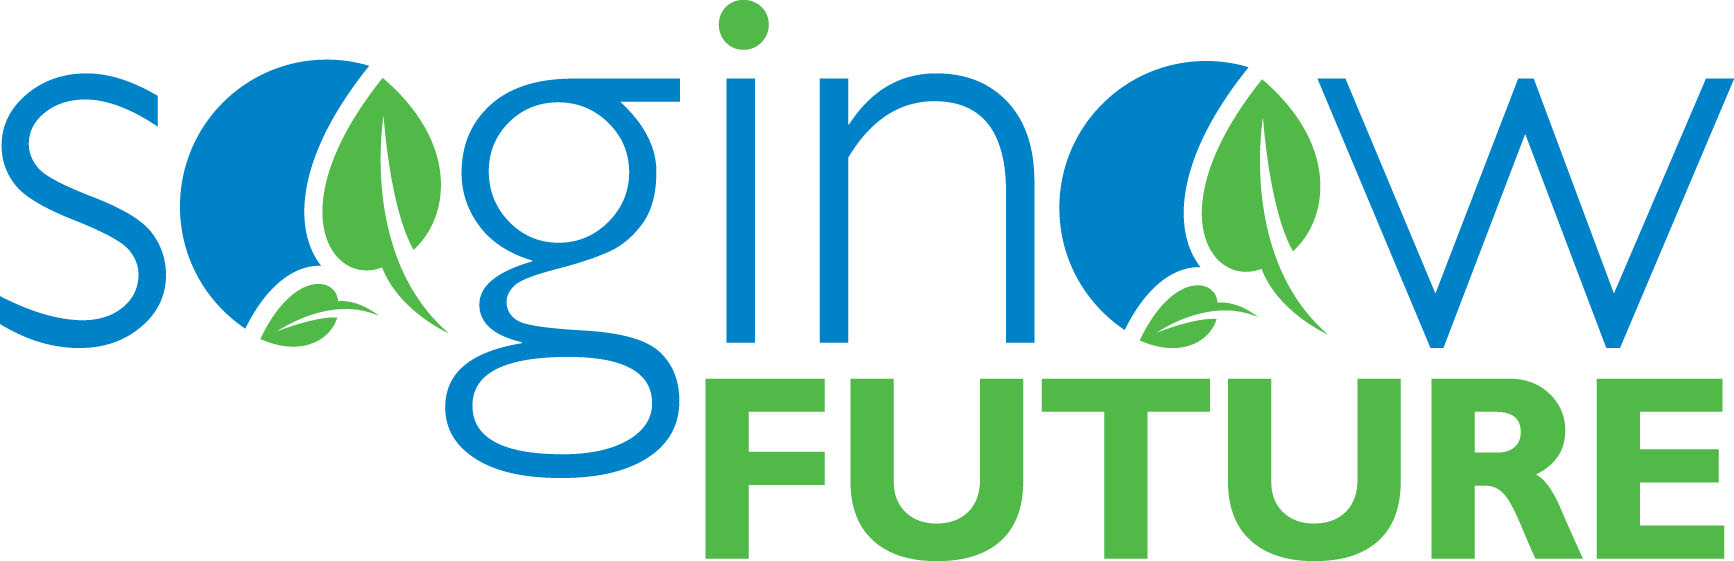 Saginaw Future Logo